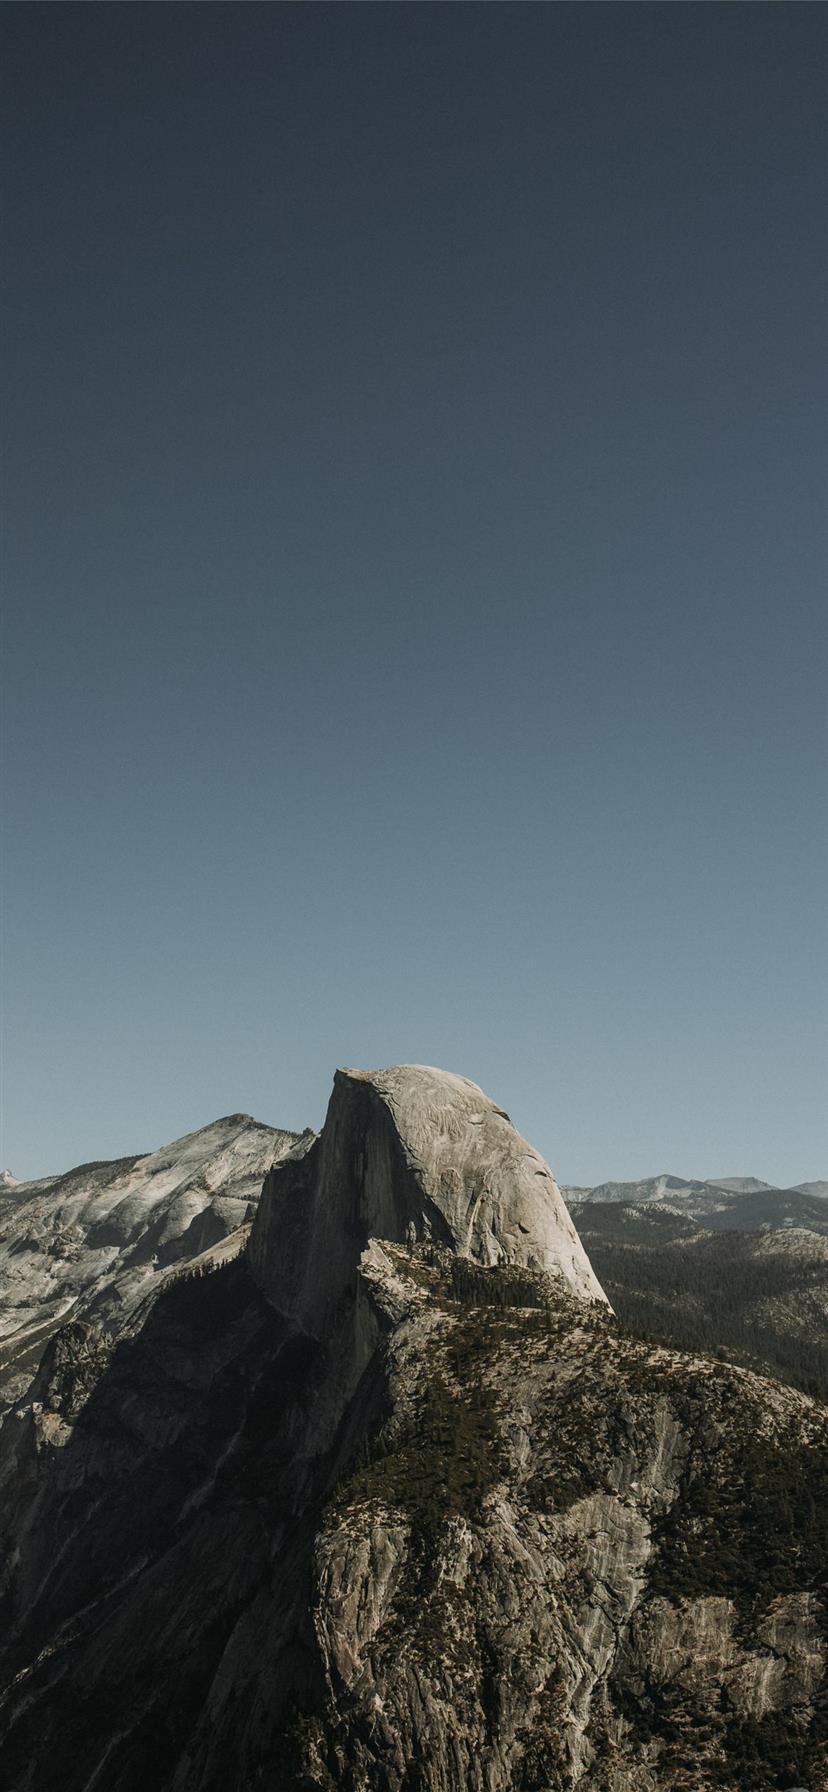 Yosemite Night iPhone Wallpaper  Iphone wallpaper landscape Yosemite  Wallpaper app